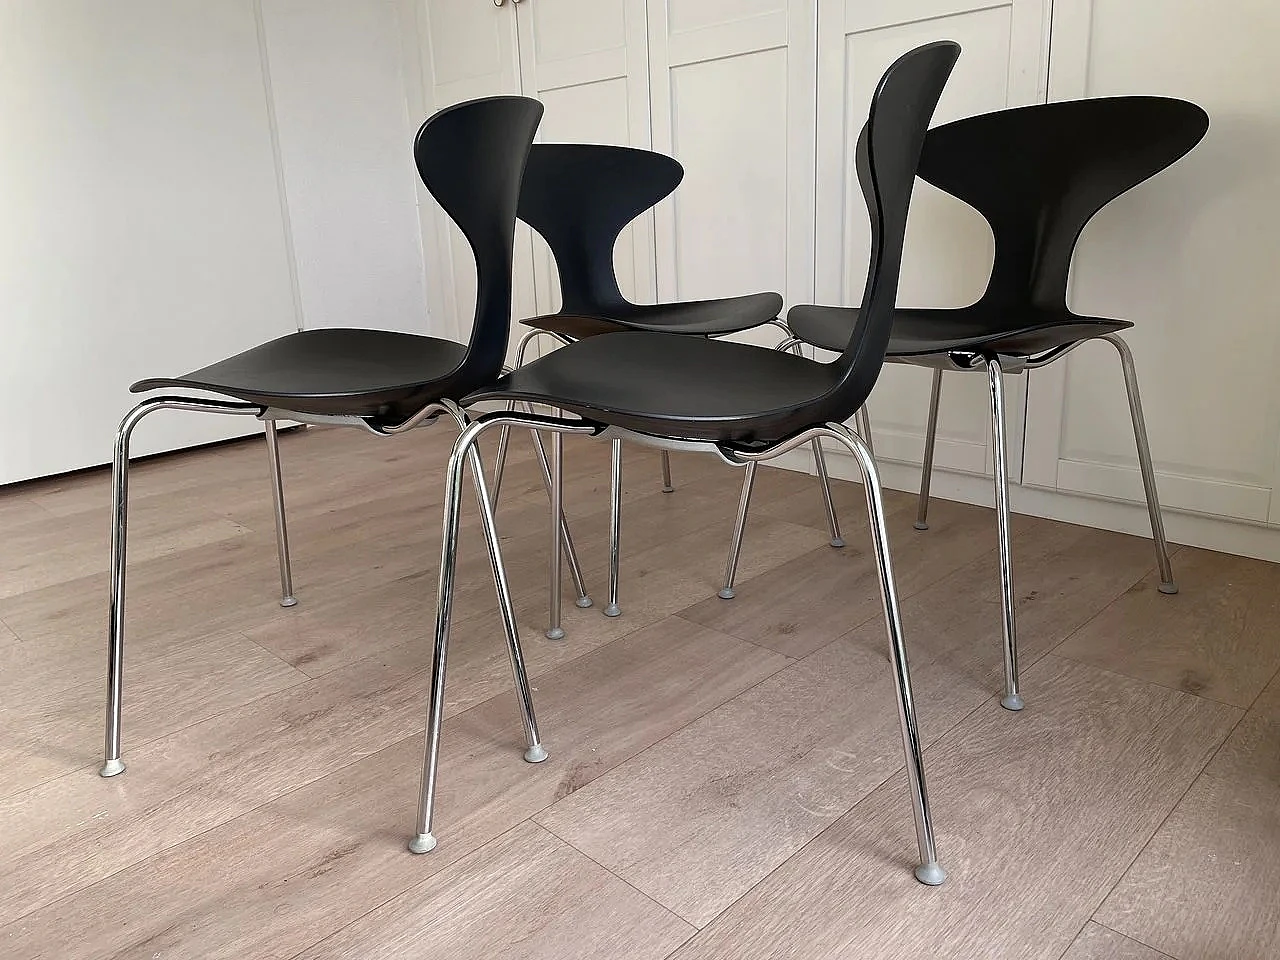 4 Orbit stackable chairs by Lovegrove & Bernhardt for Danerka, 2000s 6